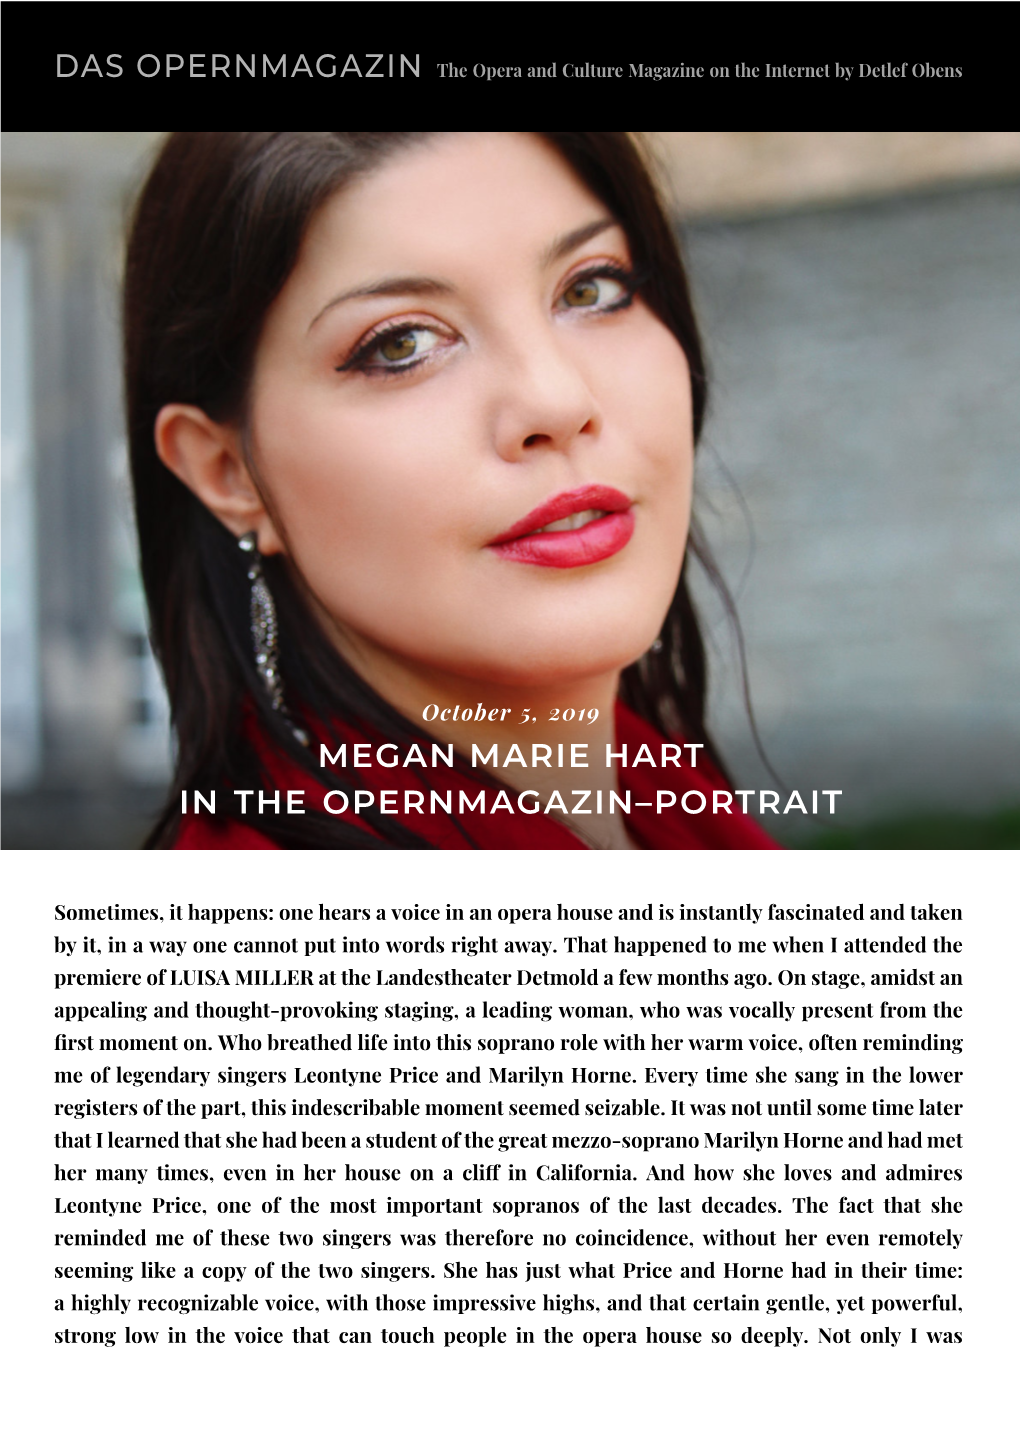 Megan Marie Hart in the Opernmagazin-Portrait